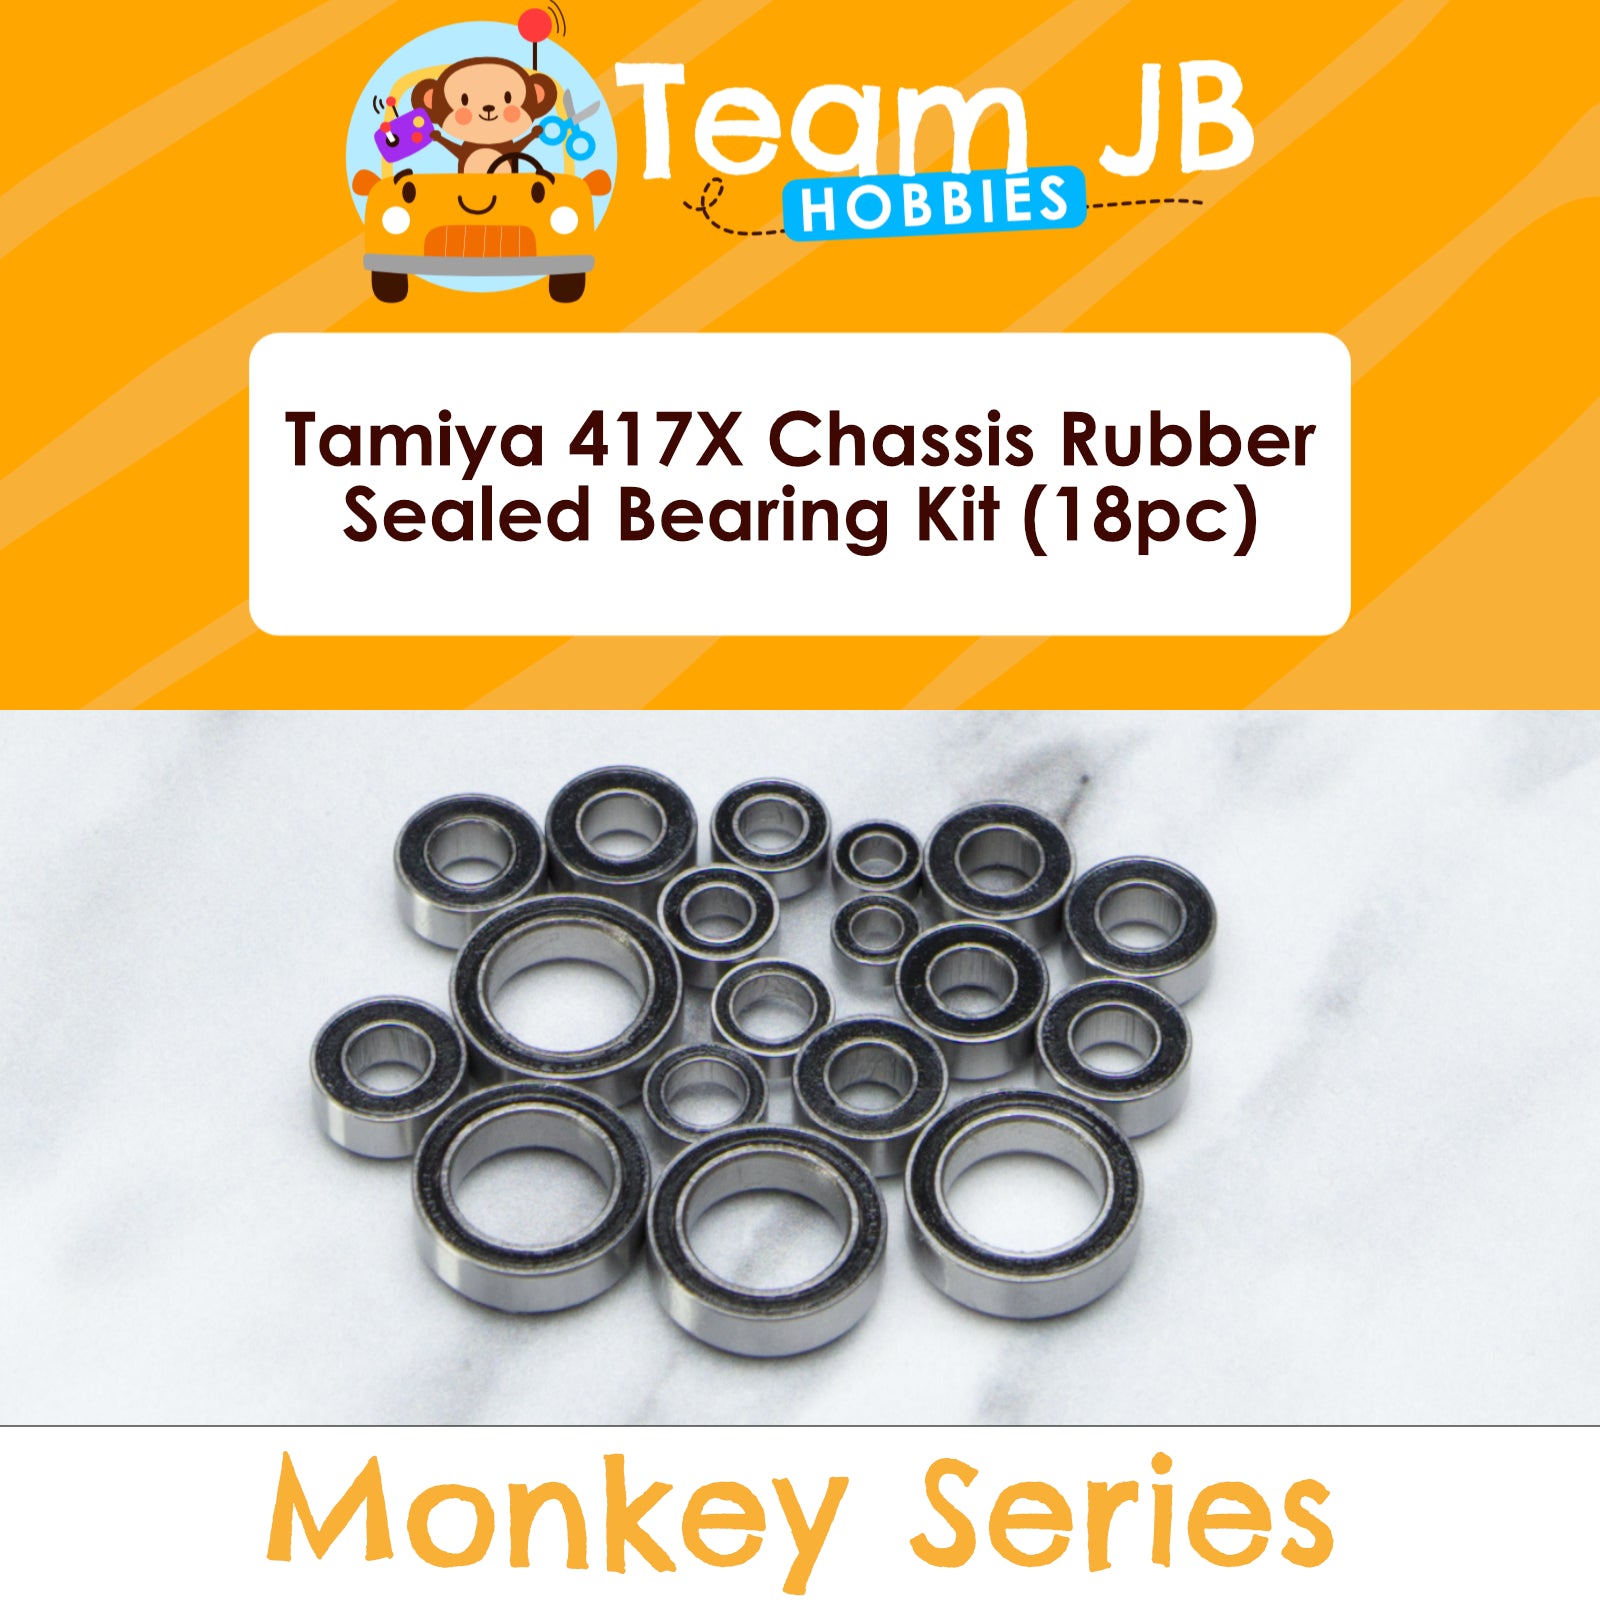 Tamiya 417X Chassis Rubber  - Sealed Bearing Kit